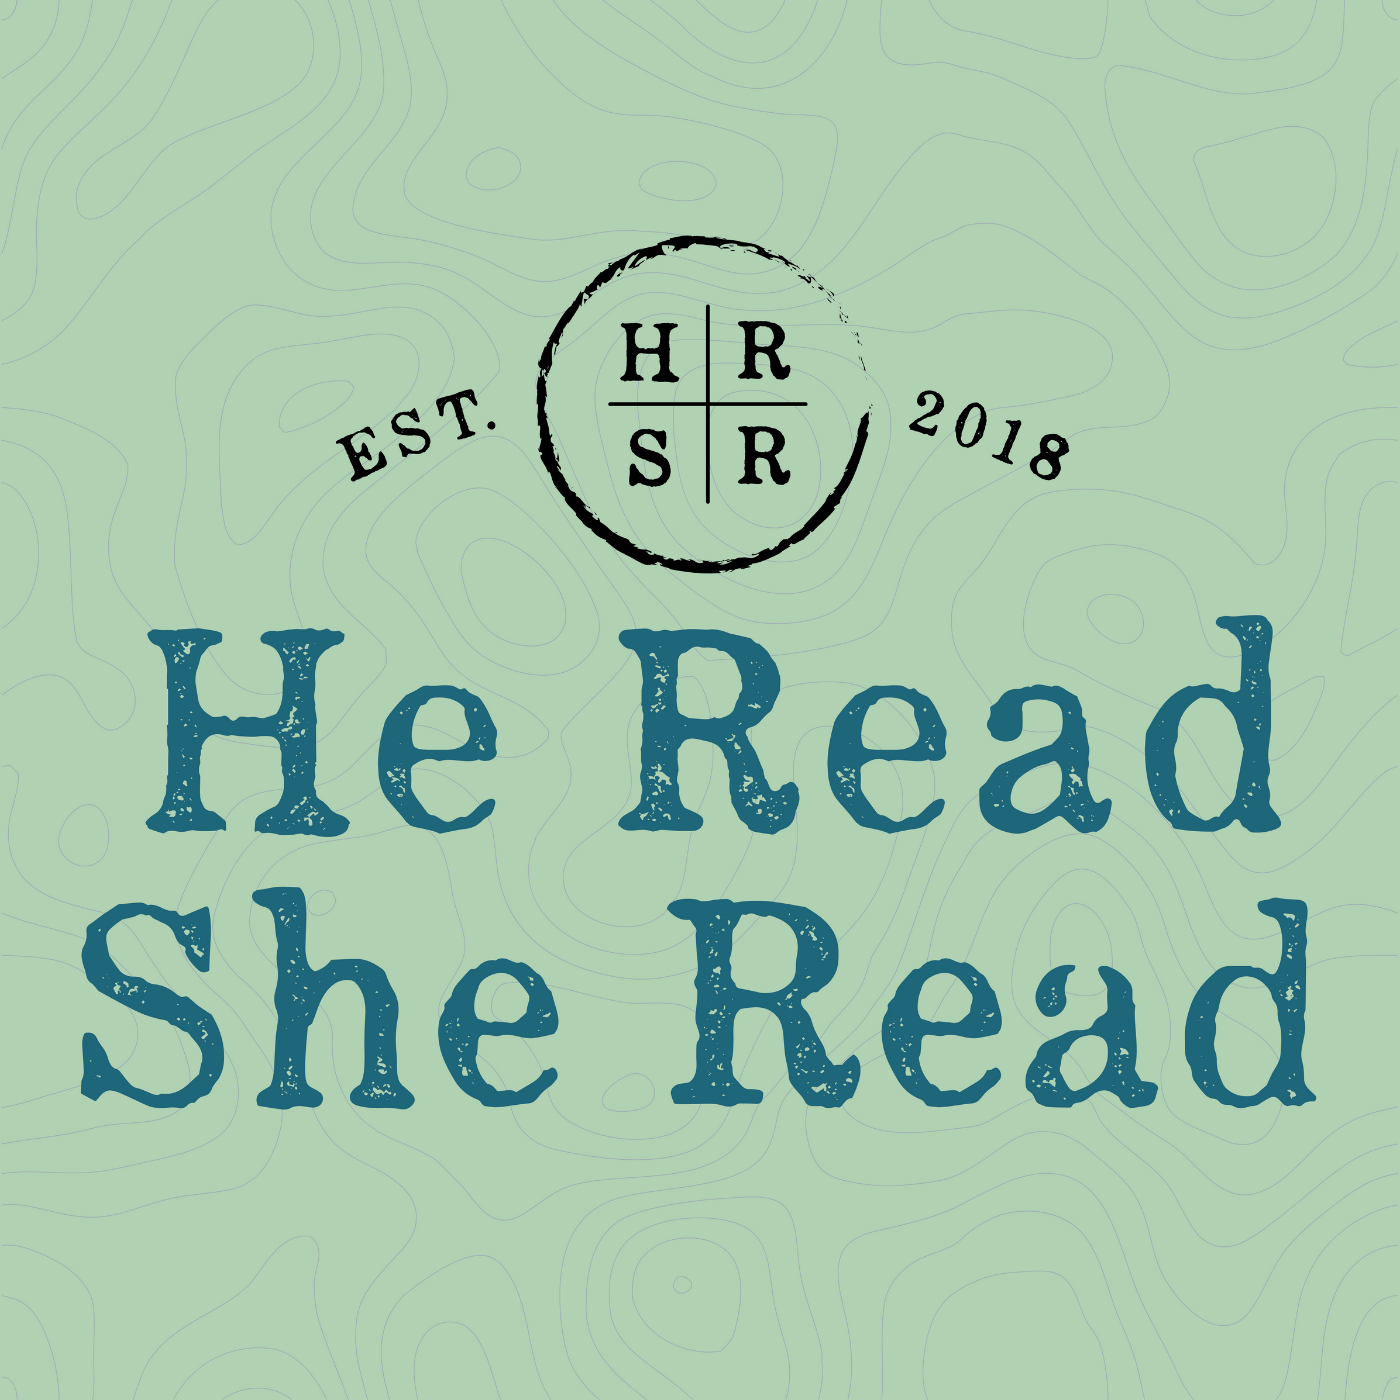 She can read well. She reads. He reads books в сокращенной форме. She reading. He she read.